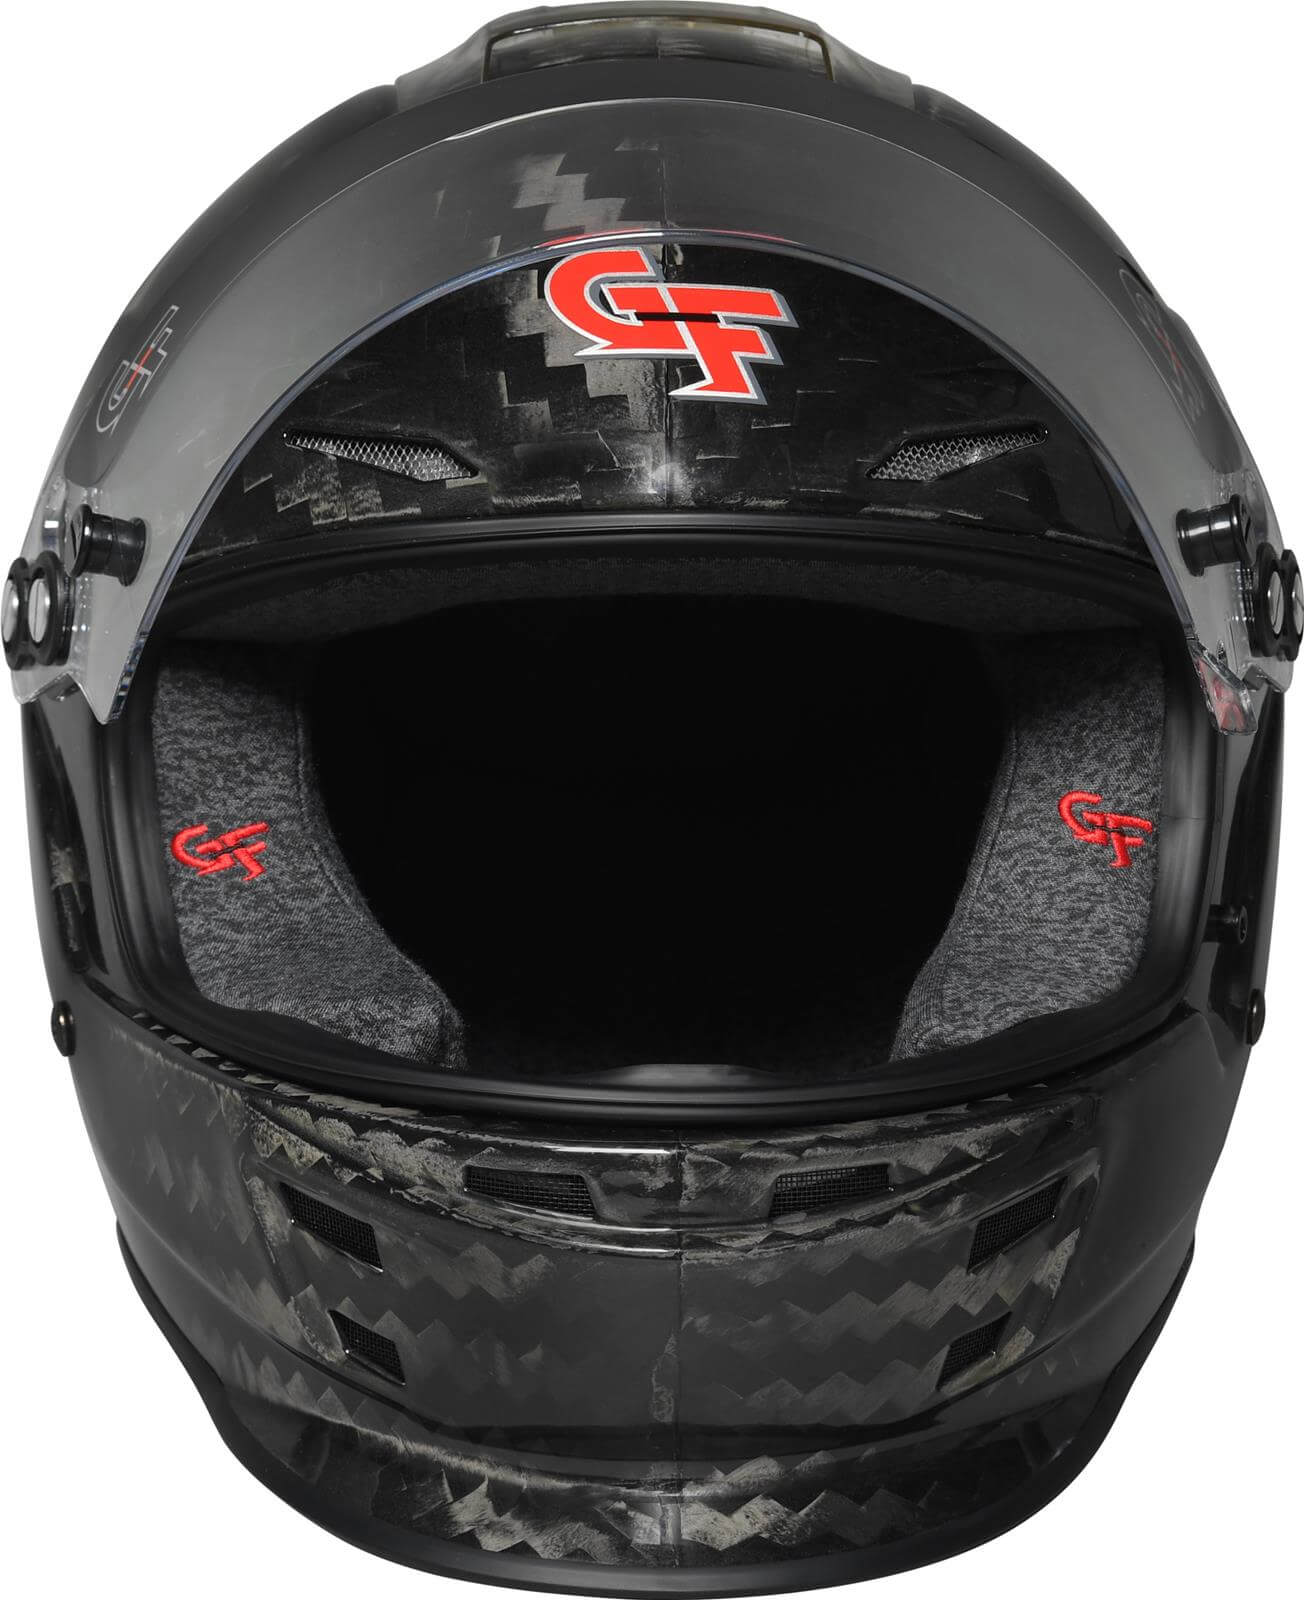 SuperNova Carbon Fiber Helmet - $1199.00